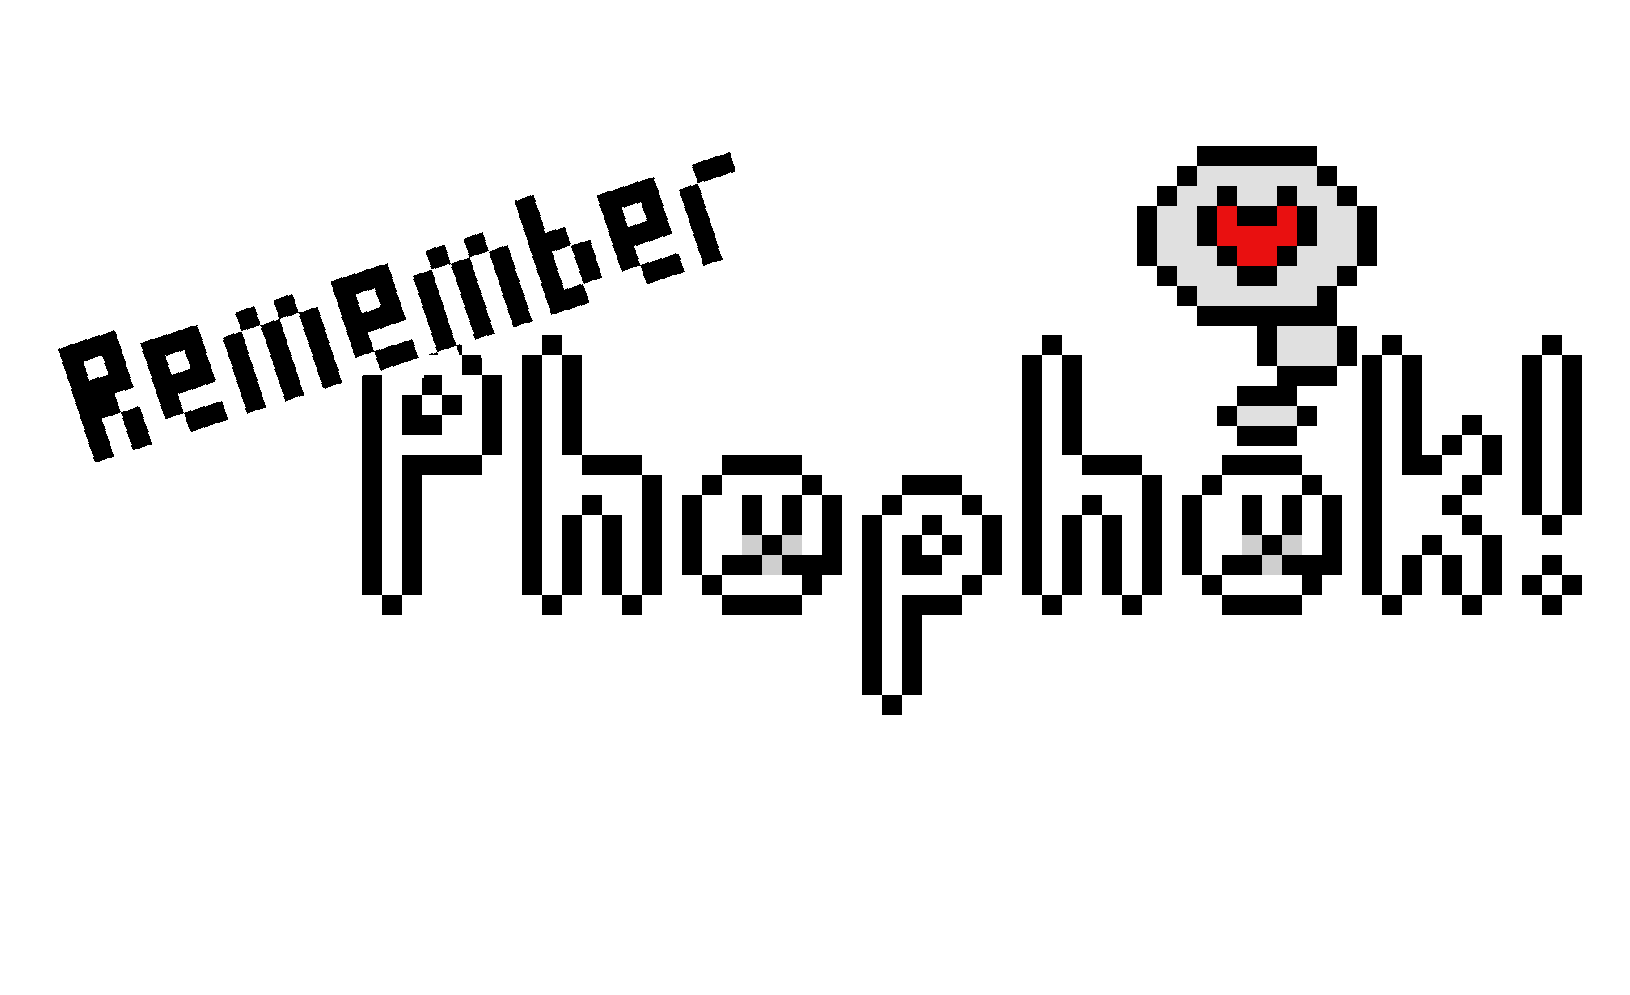 Remember Phophok!